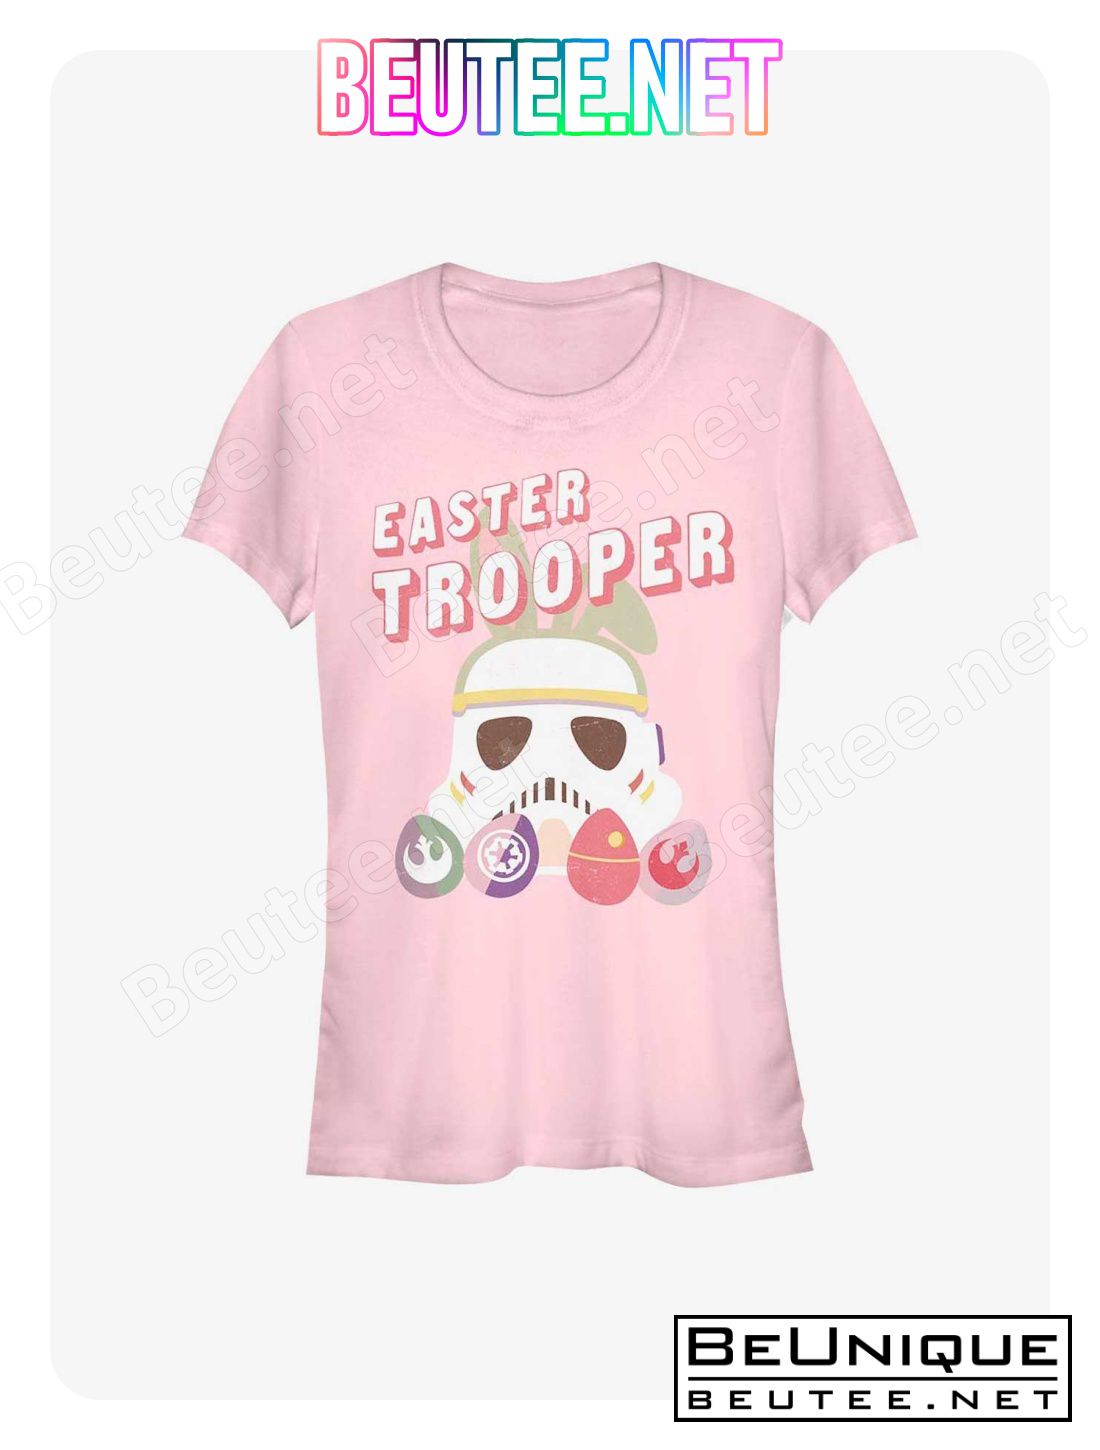 Star Wars Easter Trooper T-Shirt